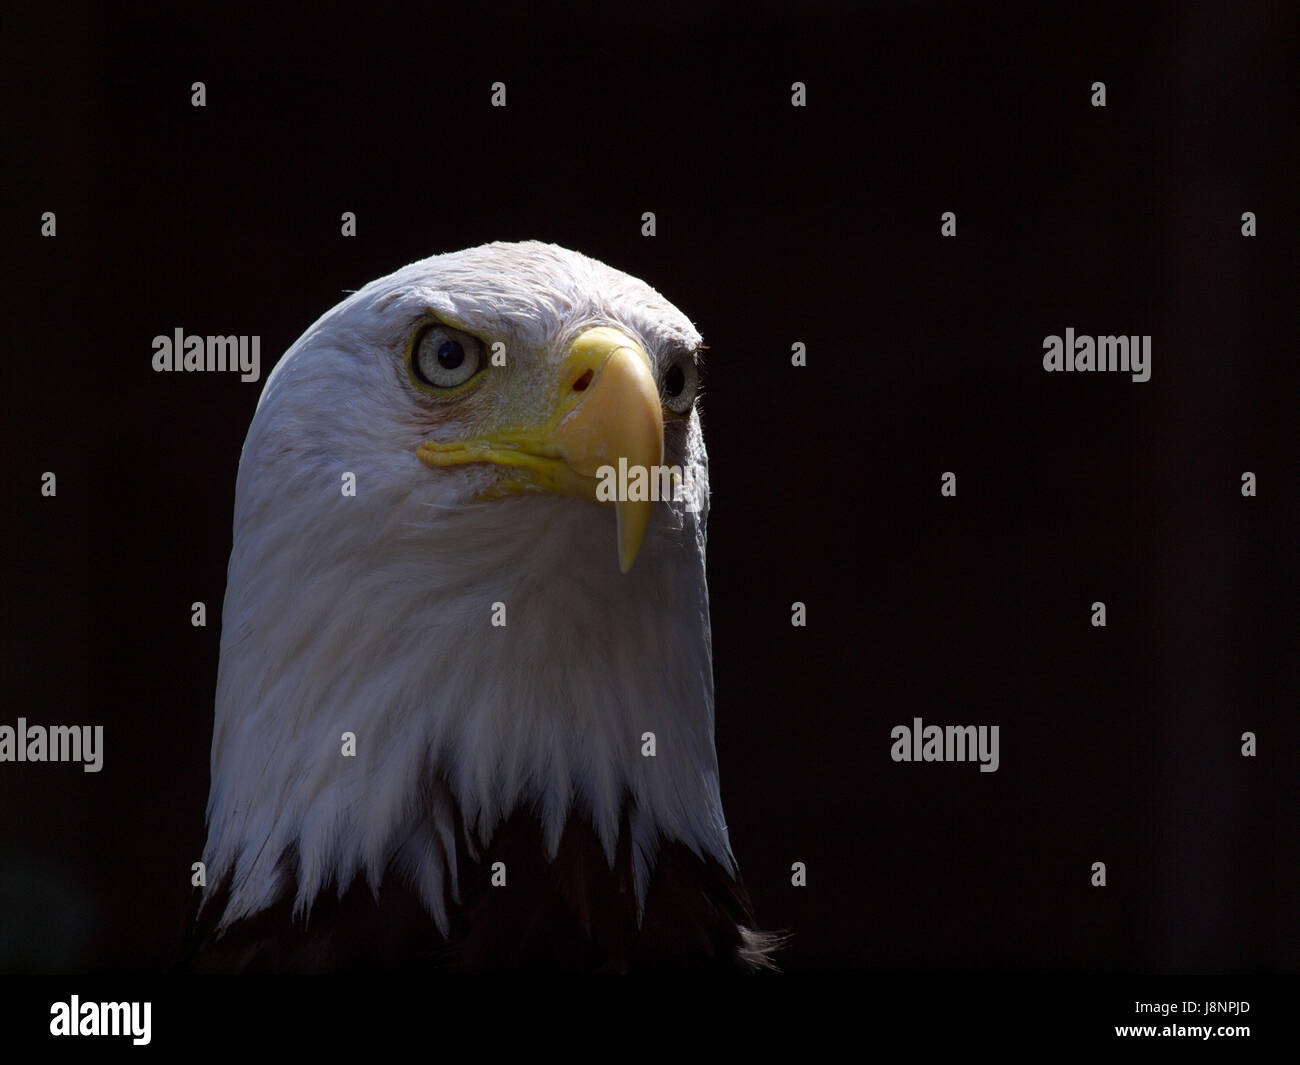 animal, bird, eye, organ, birds, birds of prey, raptor, look, glancing, see, Stock Photo